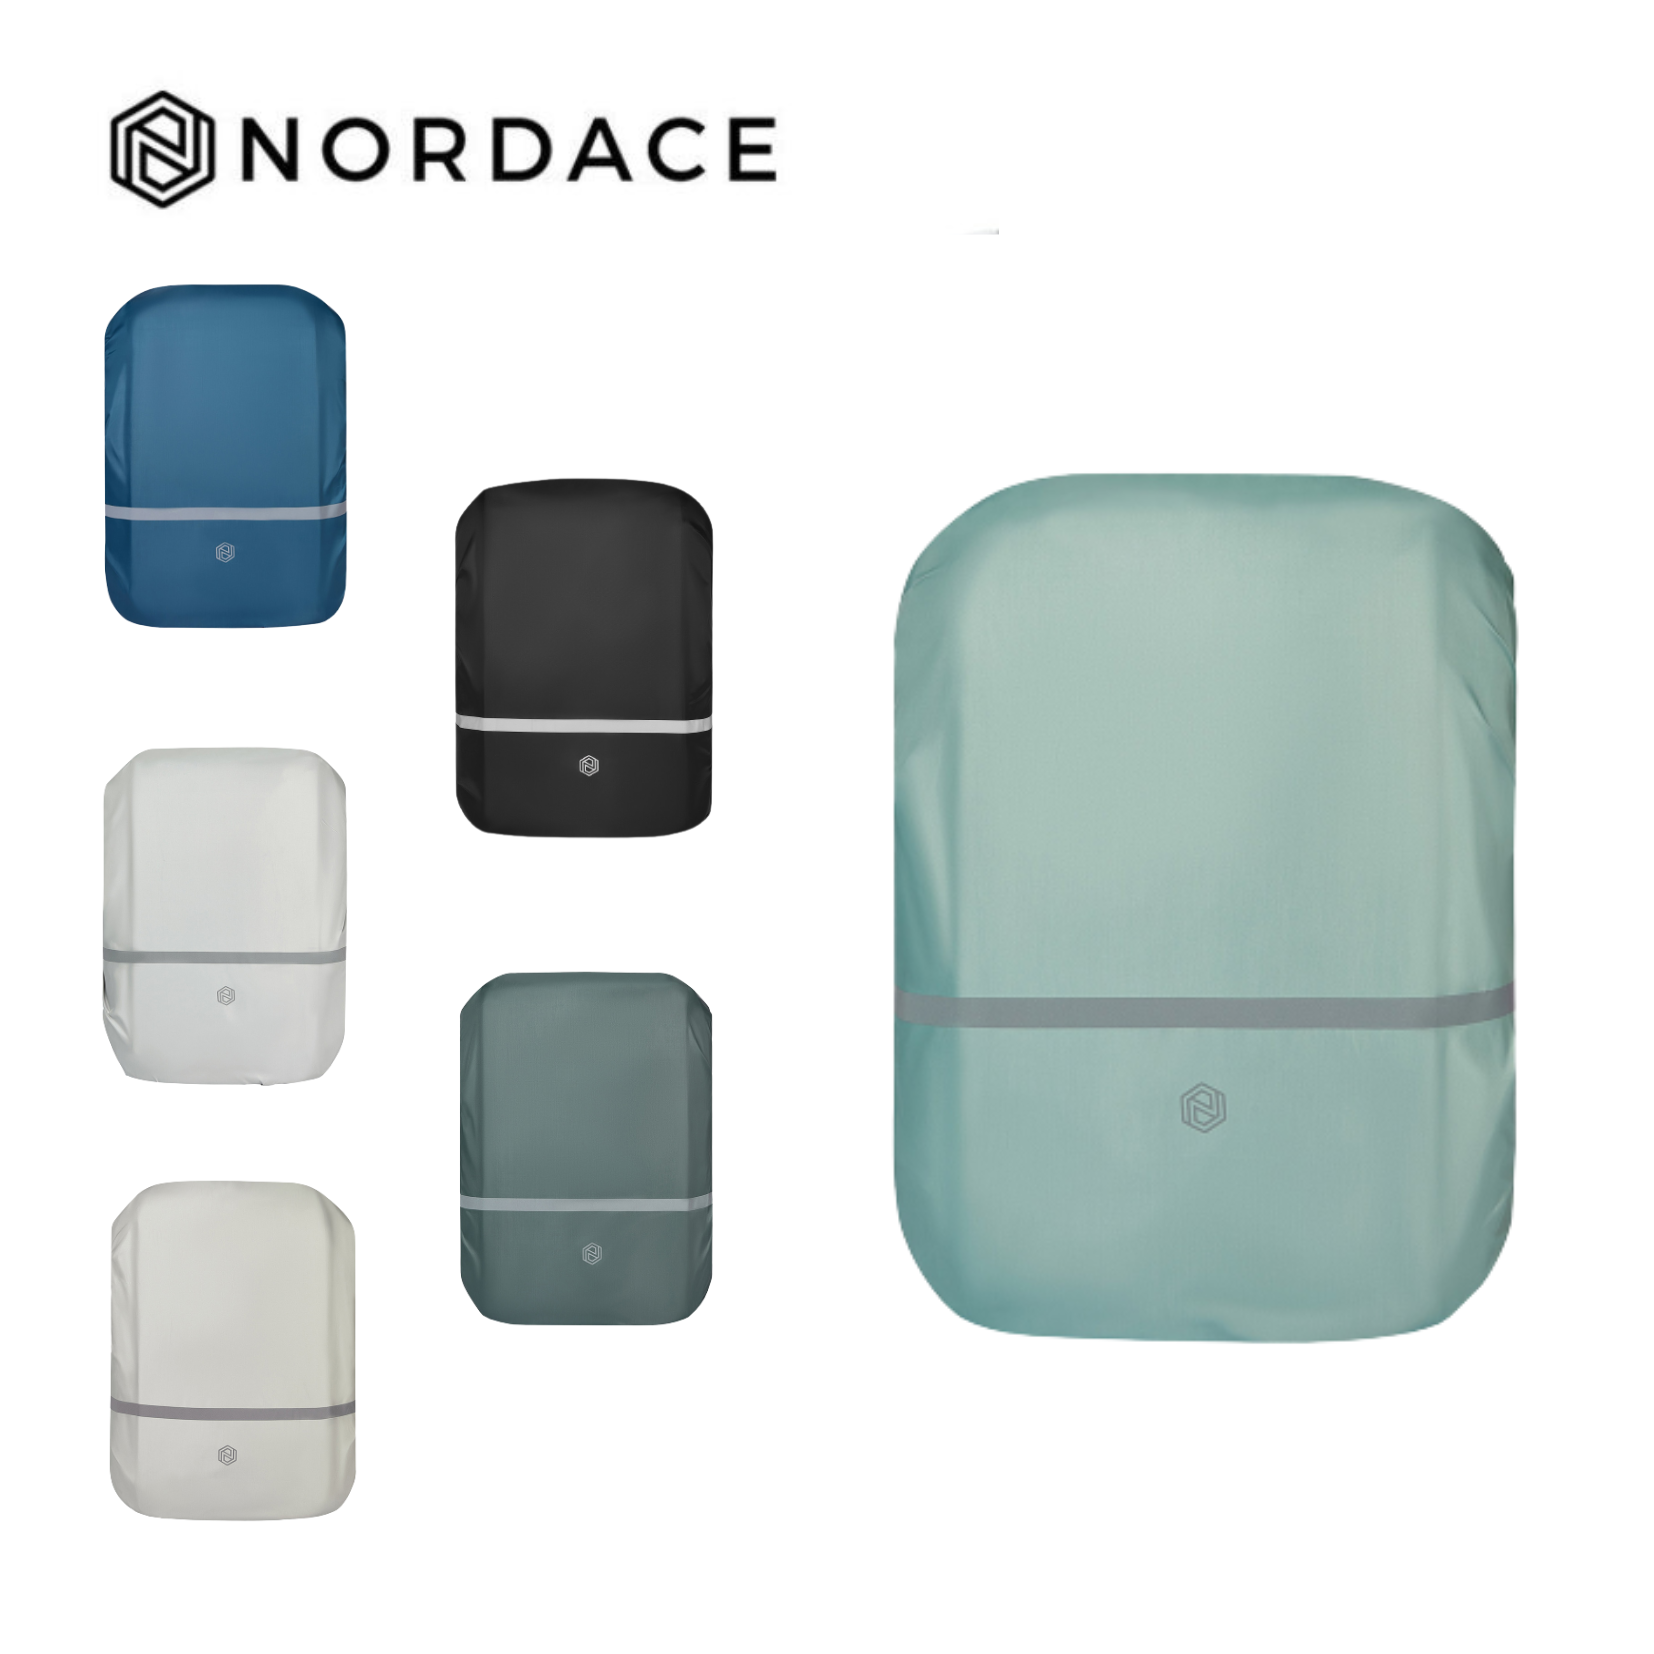 Nordace 防雨罩 背包套 防水套 防水罩 背包罩 適用於20L至40L的背包- 6色可選-綠藍色